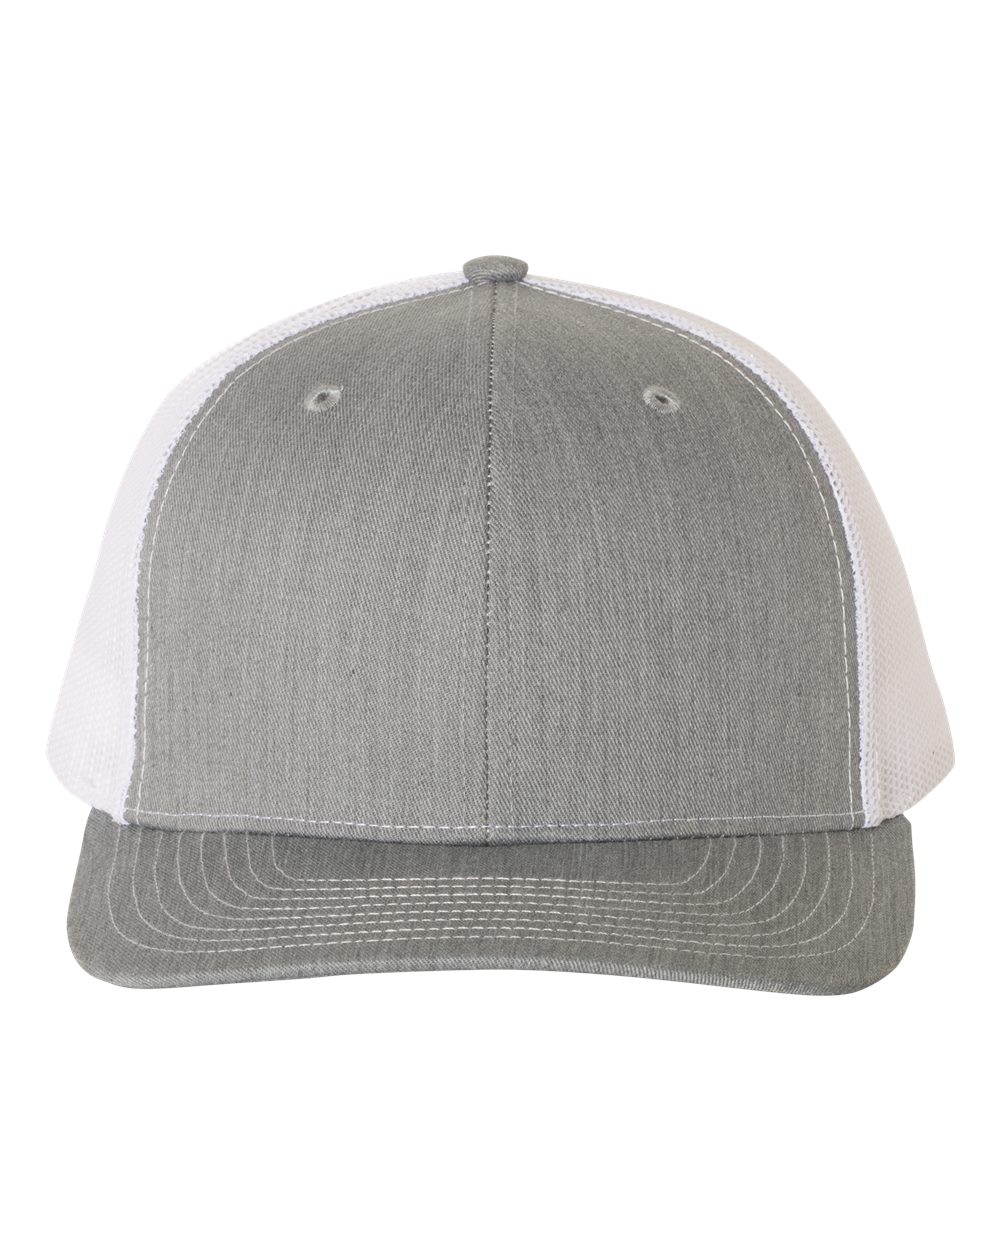 Richardson Snapback Trucker Hat (112) in Heather Grey/White